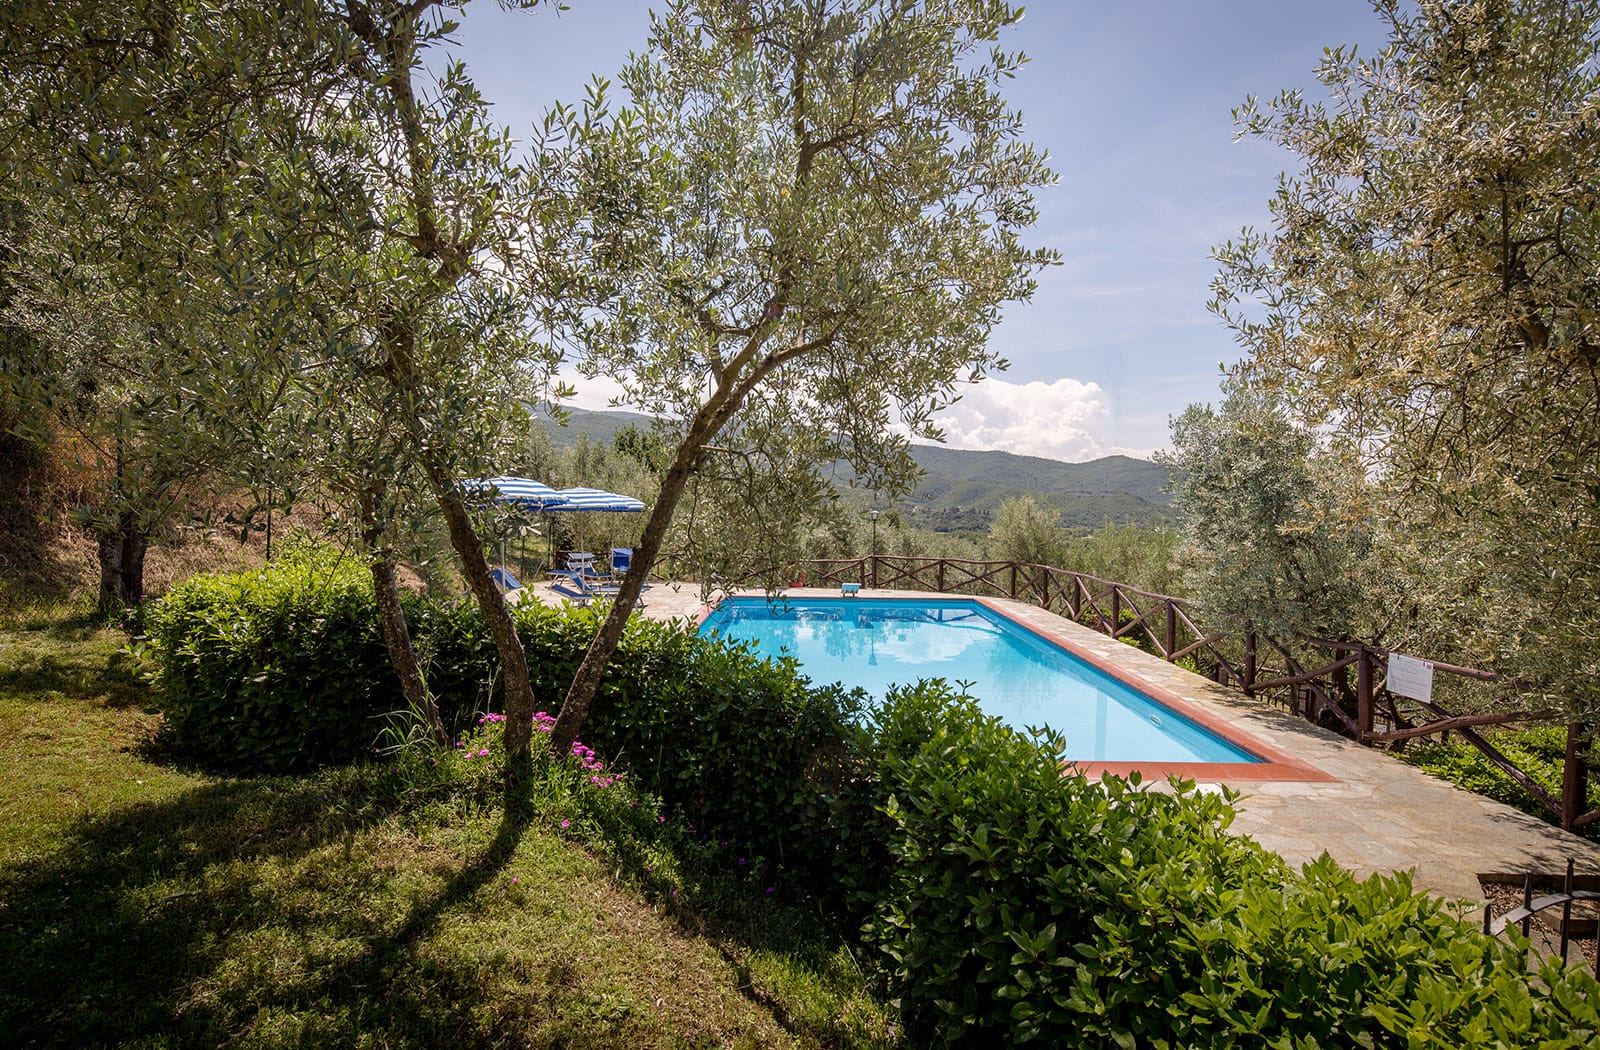 Holiday Houses in Tuscany between Castiglion Fiorentino and Cortona